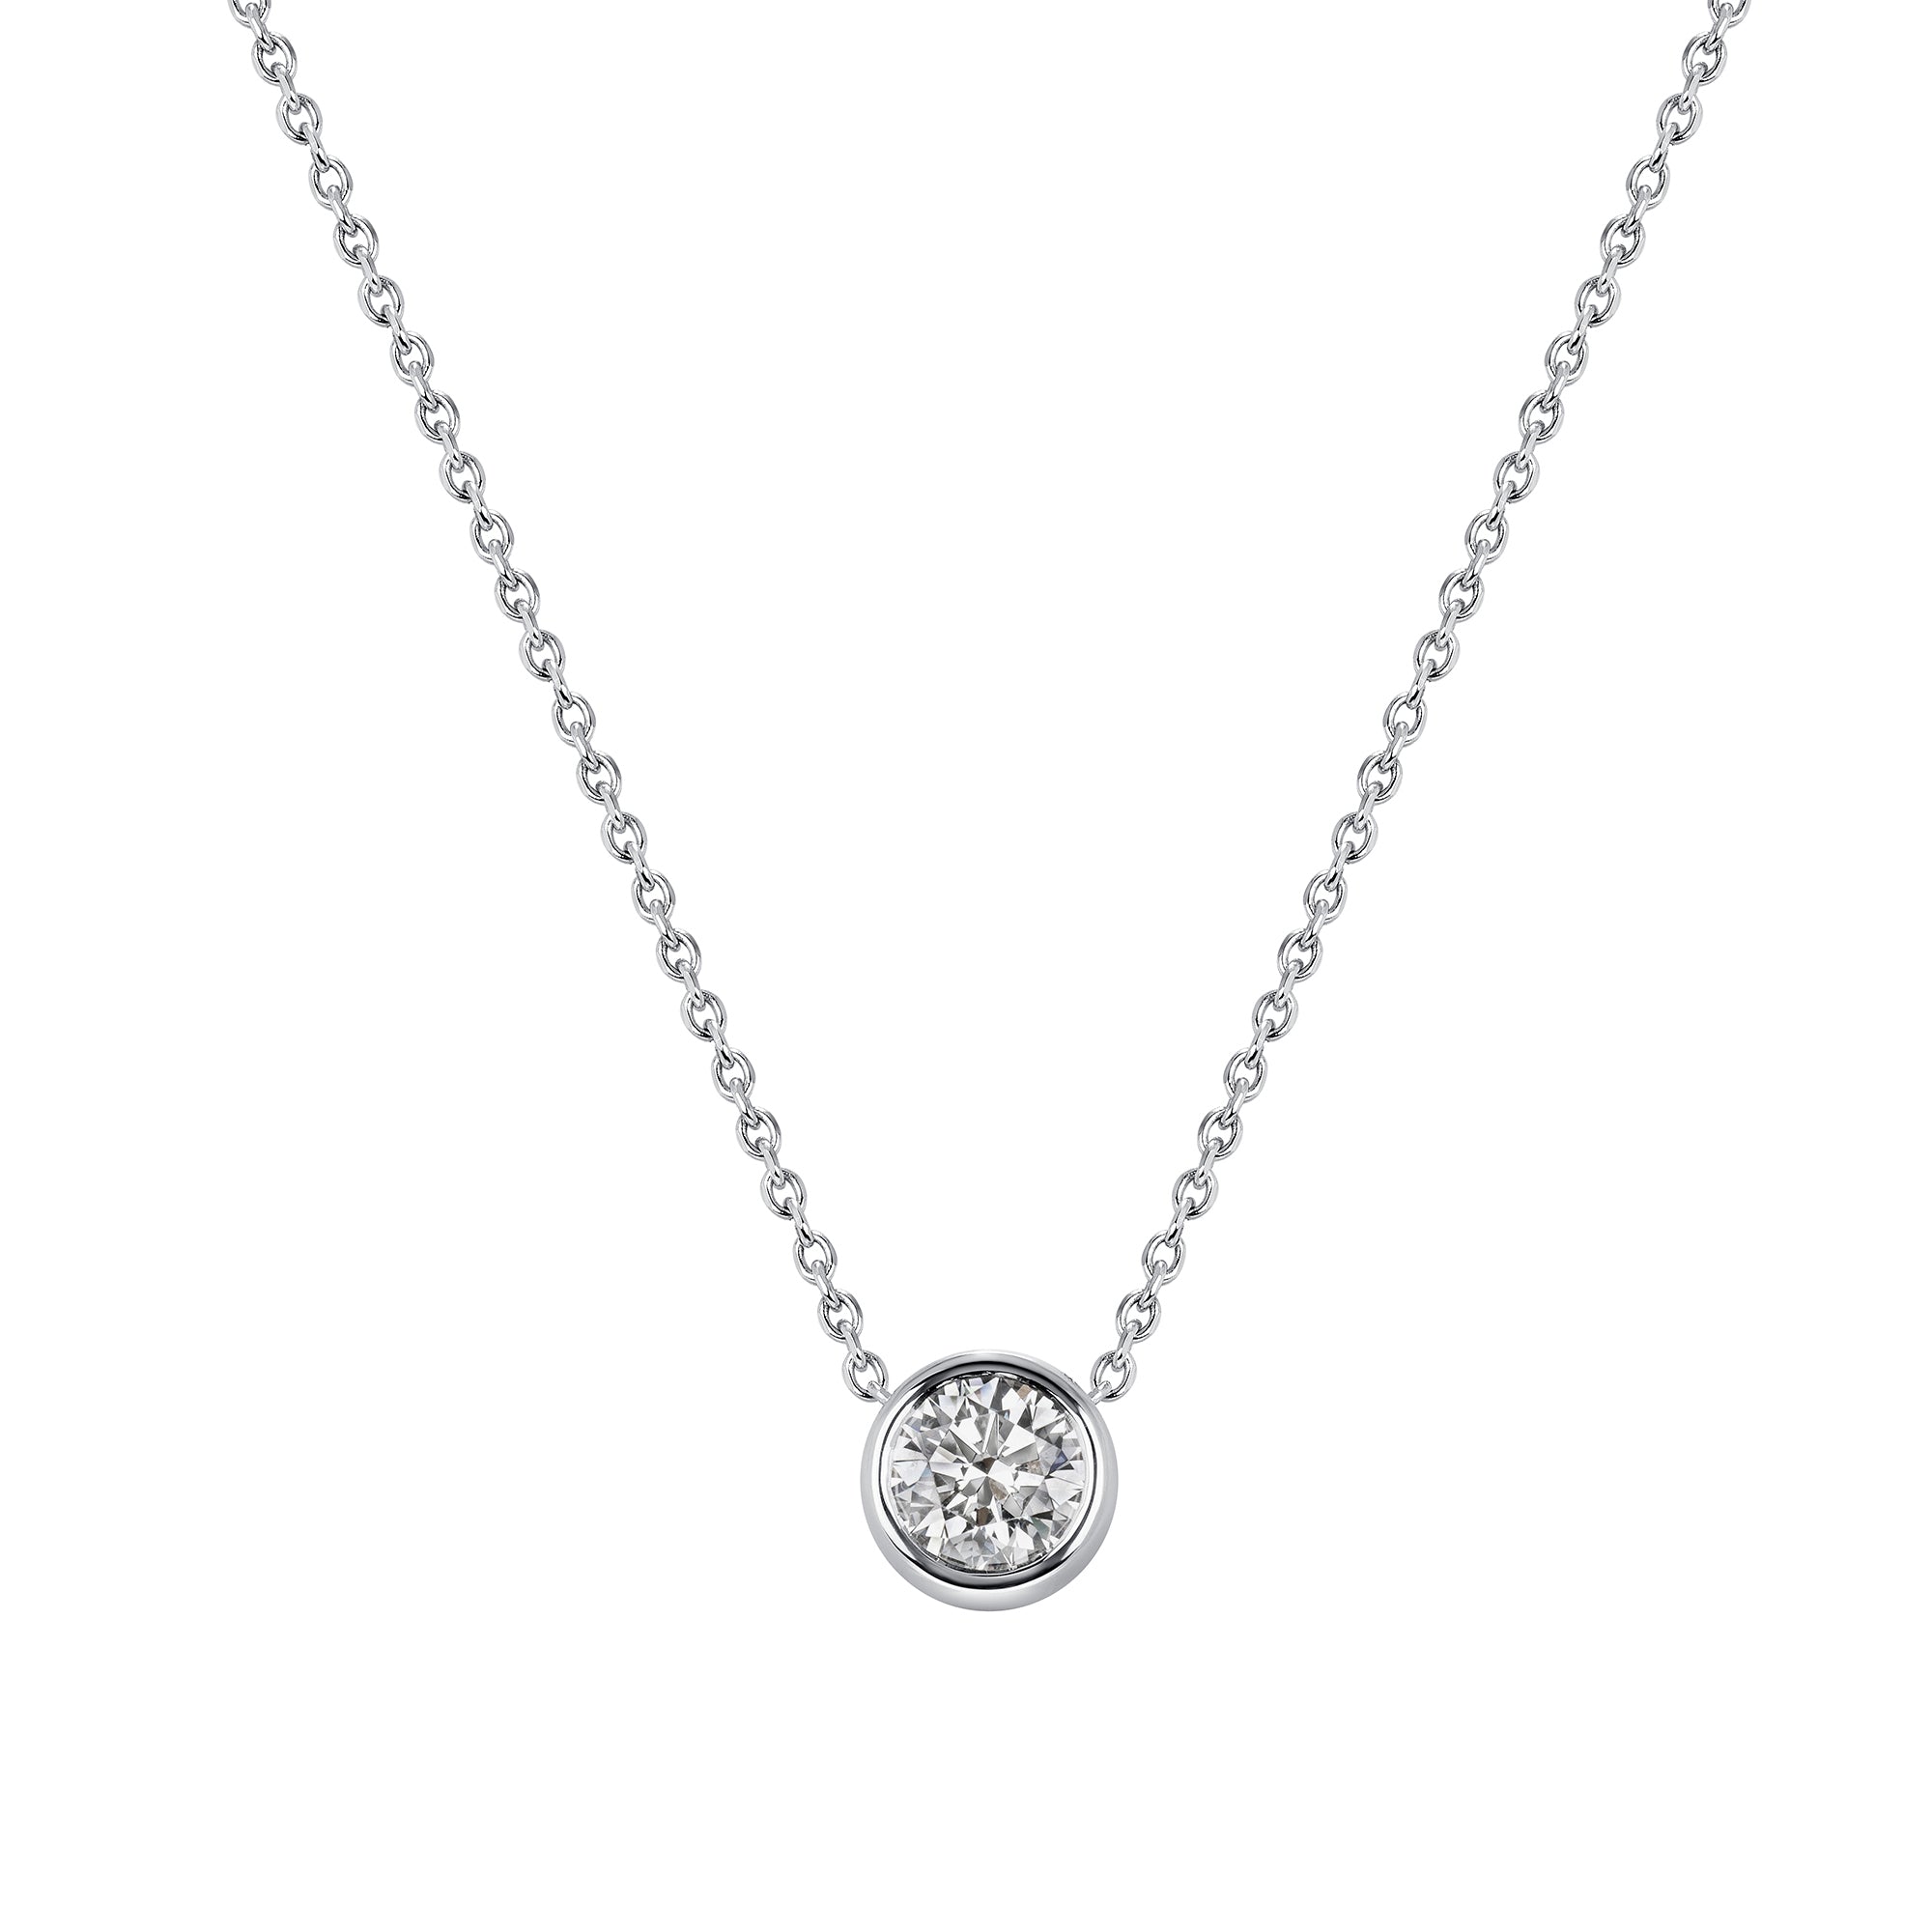 Round Cut Bezel Set Diamond Pendant Necklace in White Gold